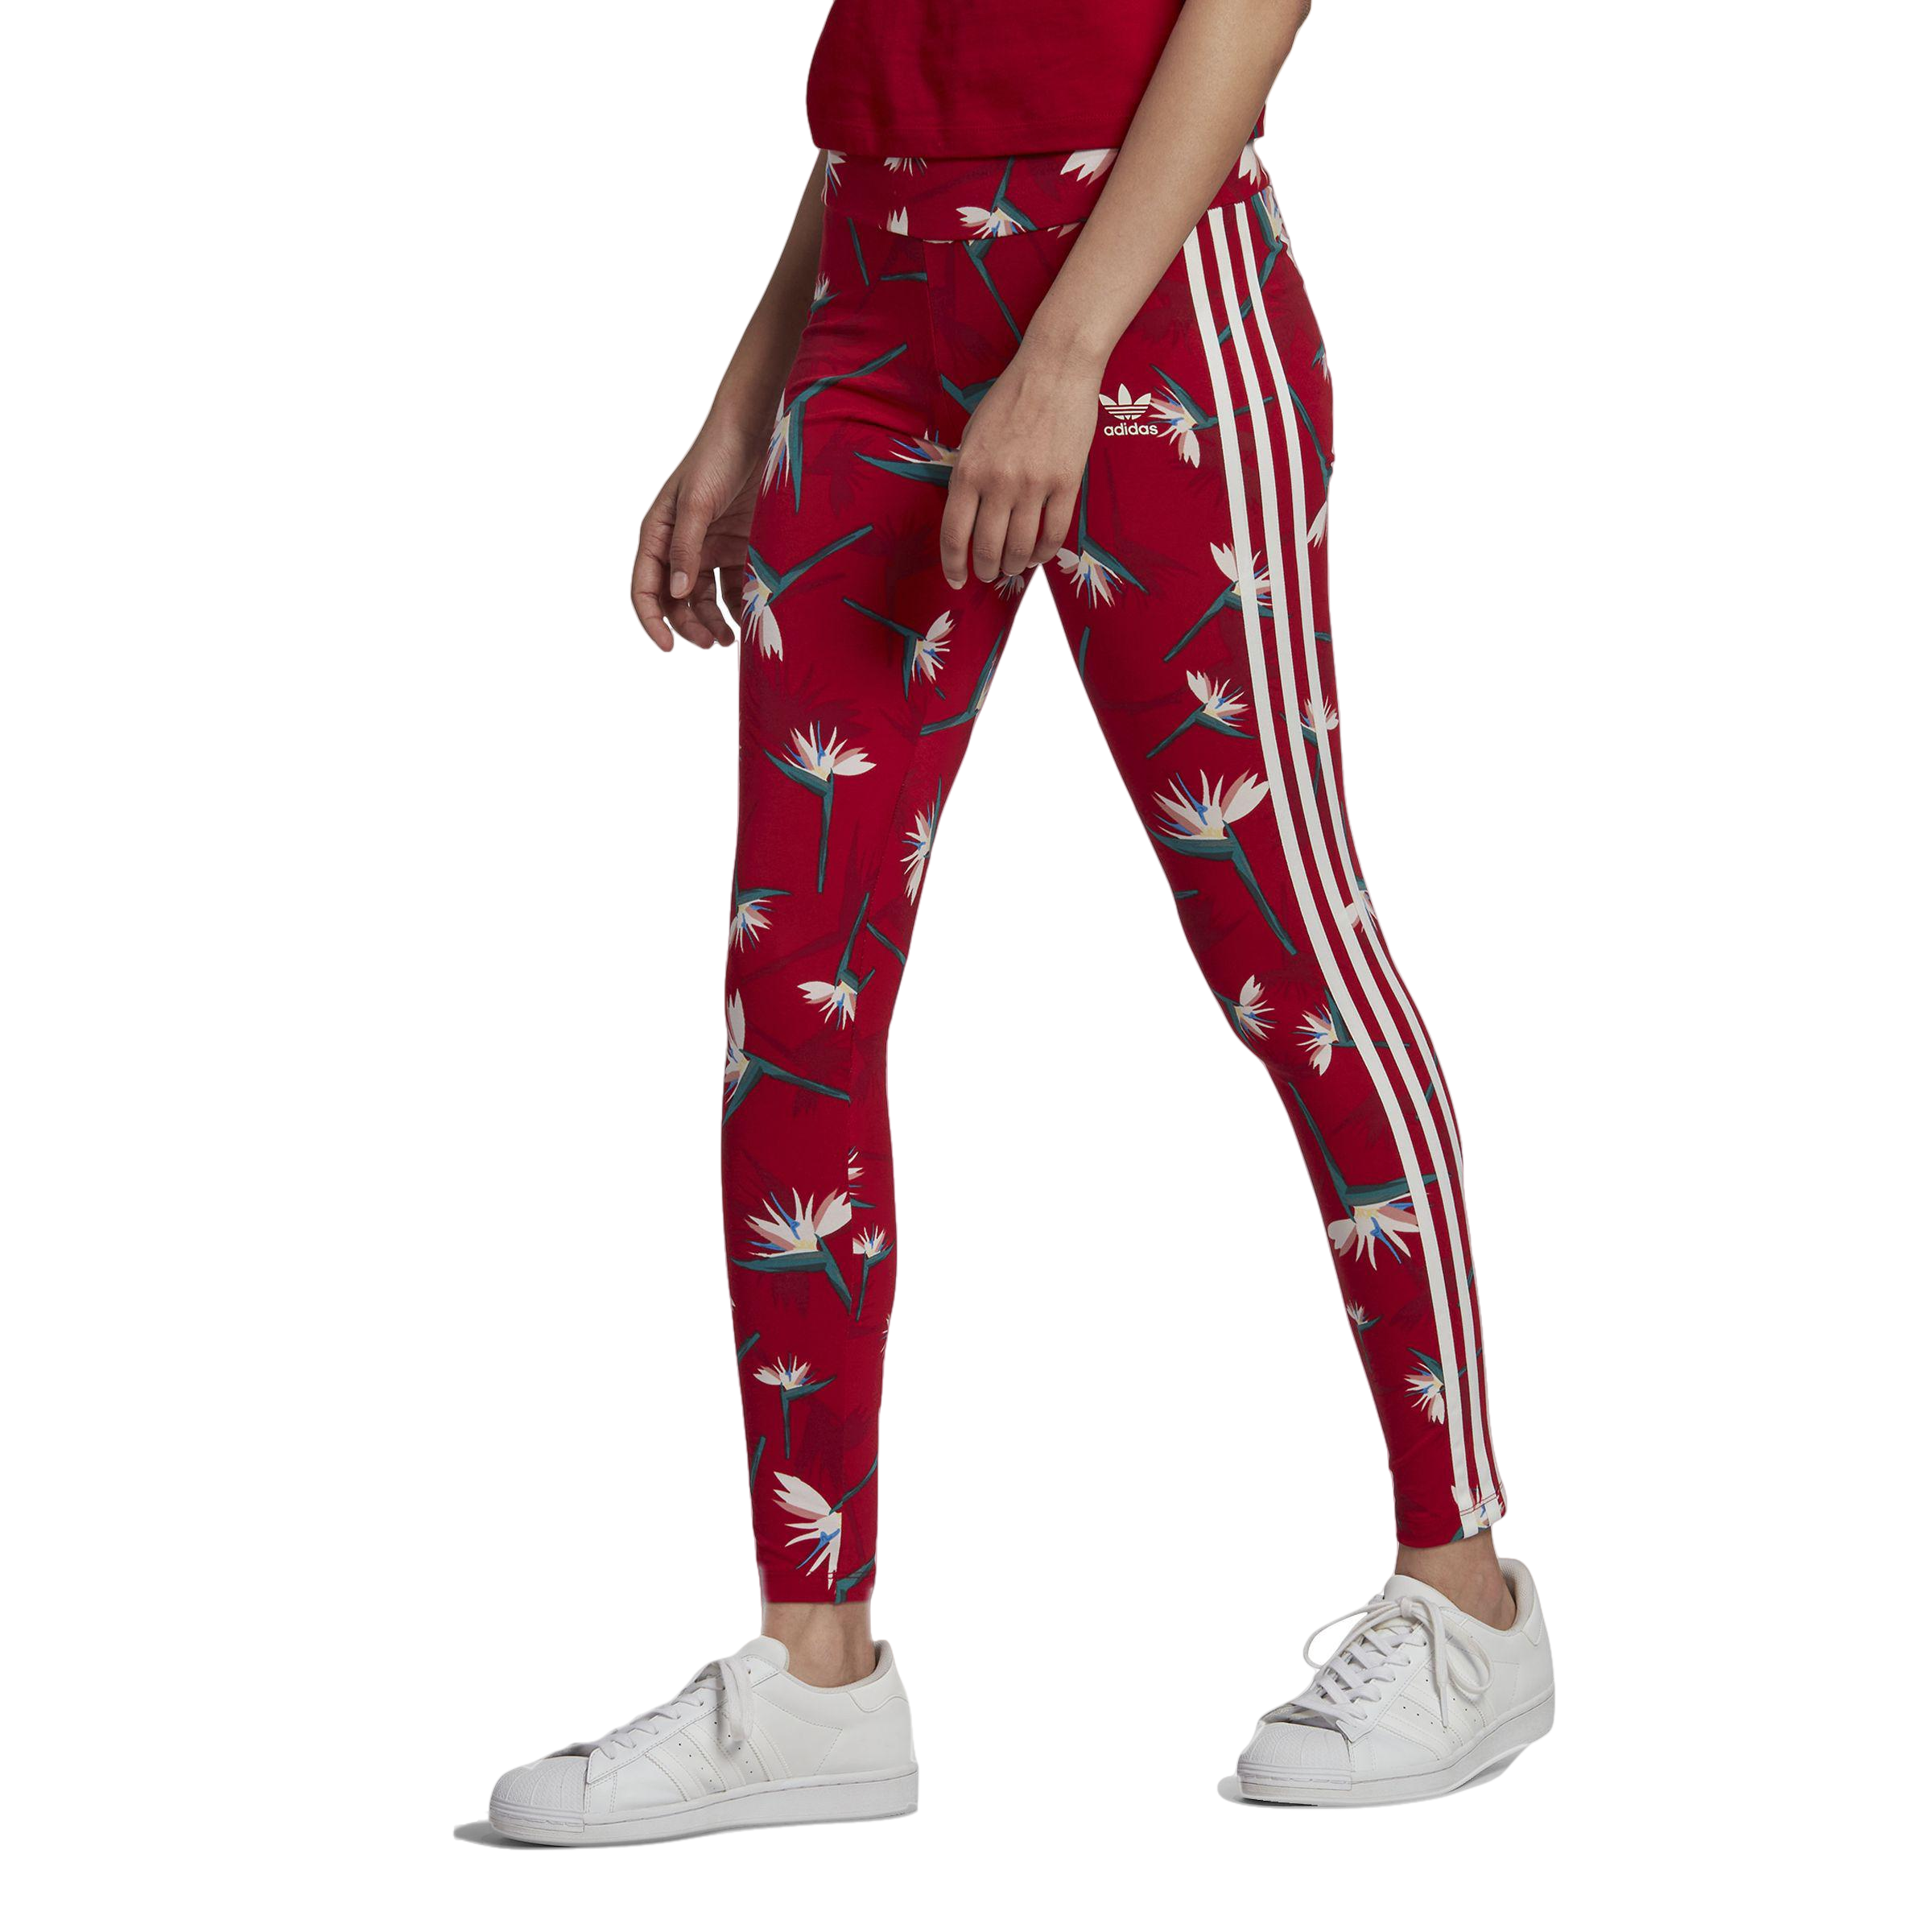 Buy Adidas women sportswear fit full leg training leggings red